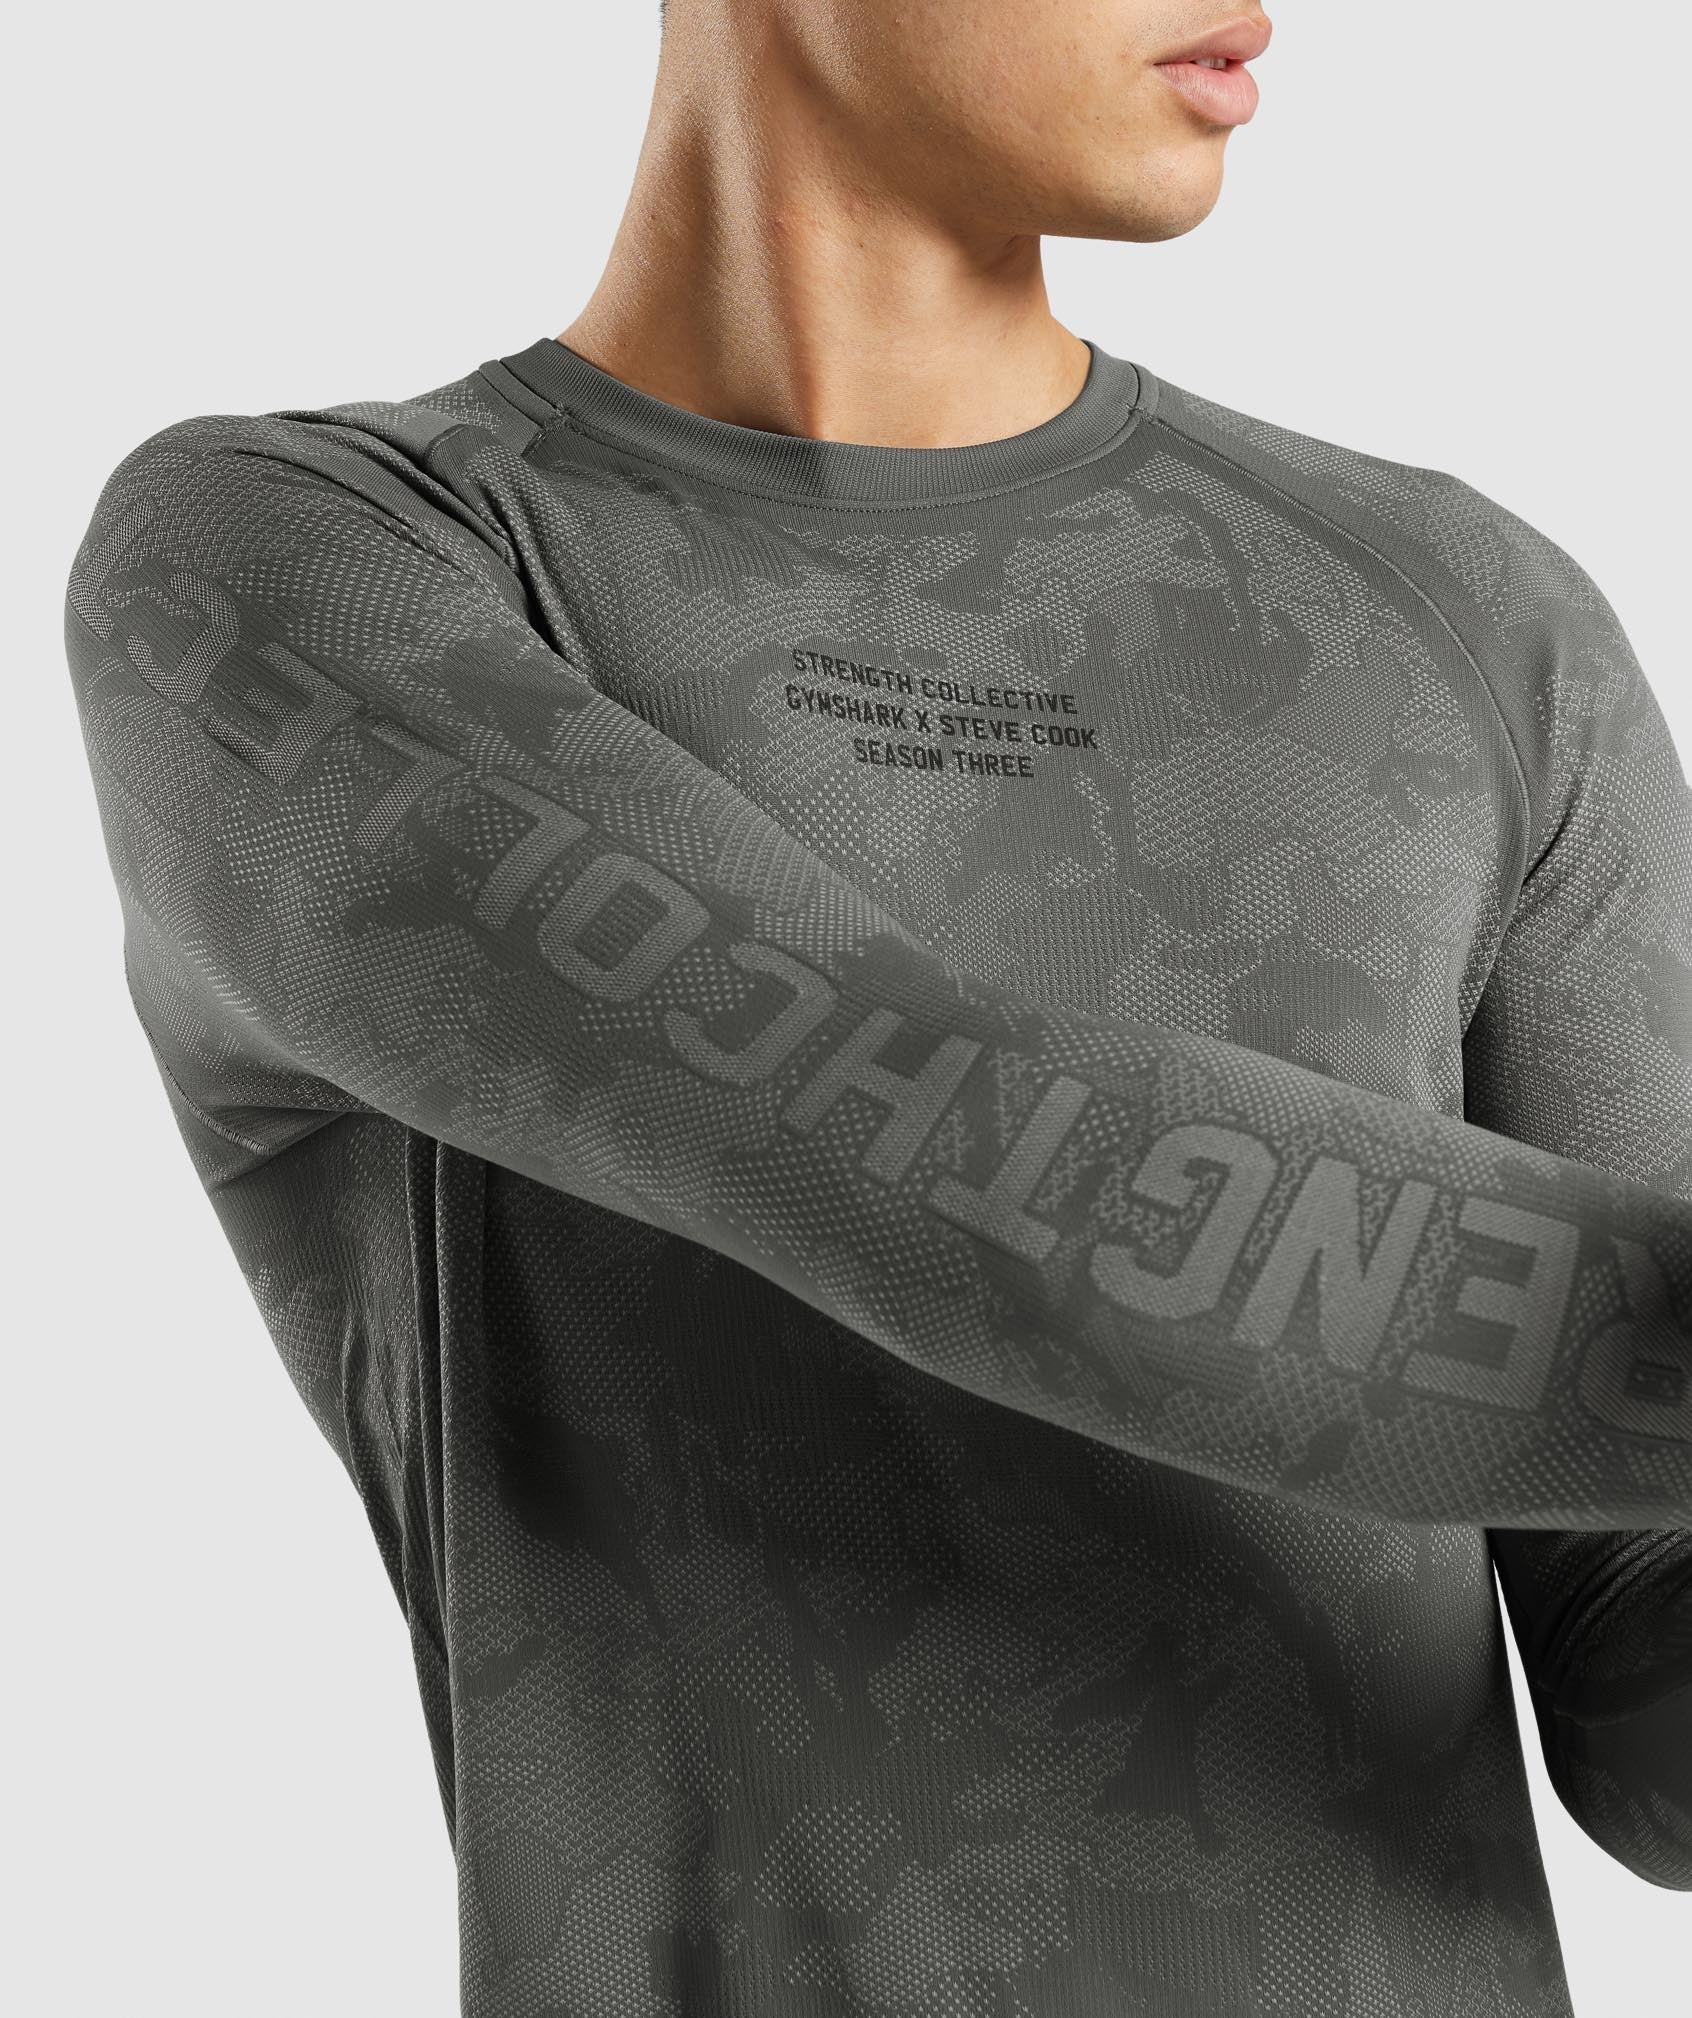 Gymshark//Steve Cook Long Sleeve Seamless T-Shirt in Charcoal Grey/Smokey Grey - view 6